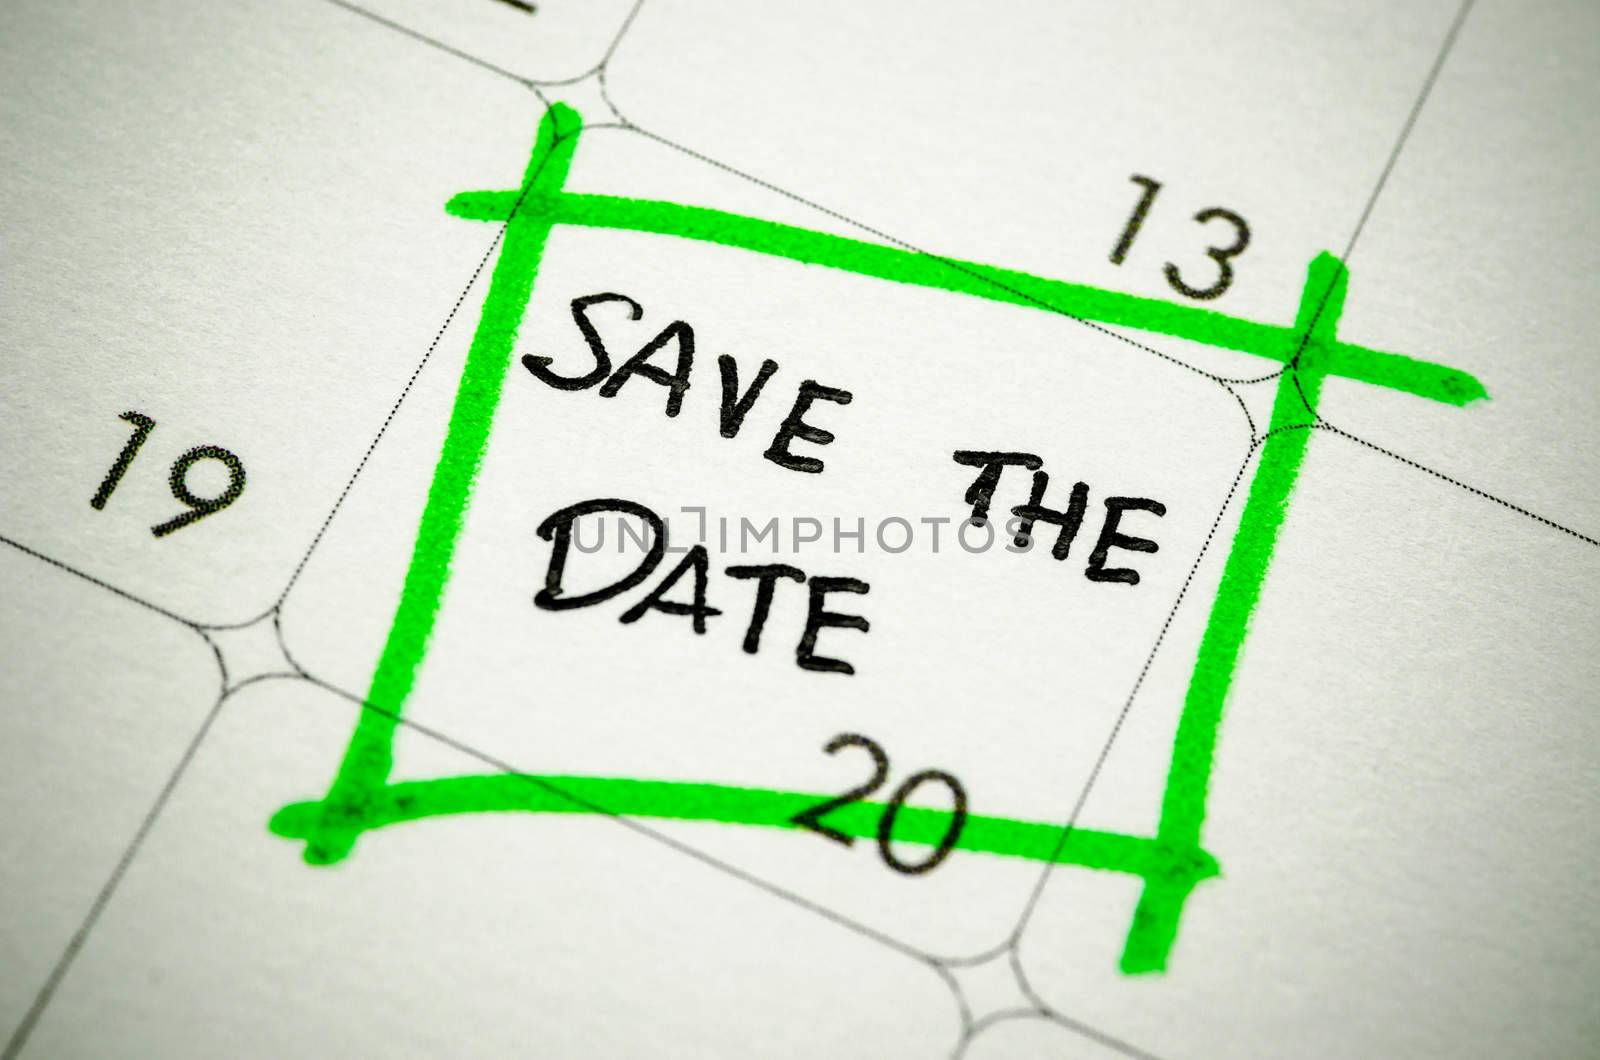 Save the date words written on calendar.